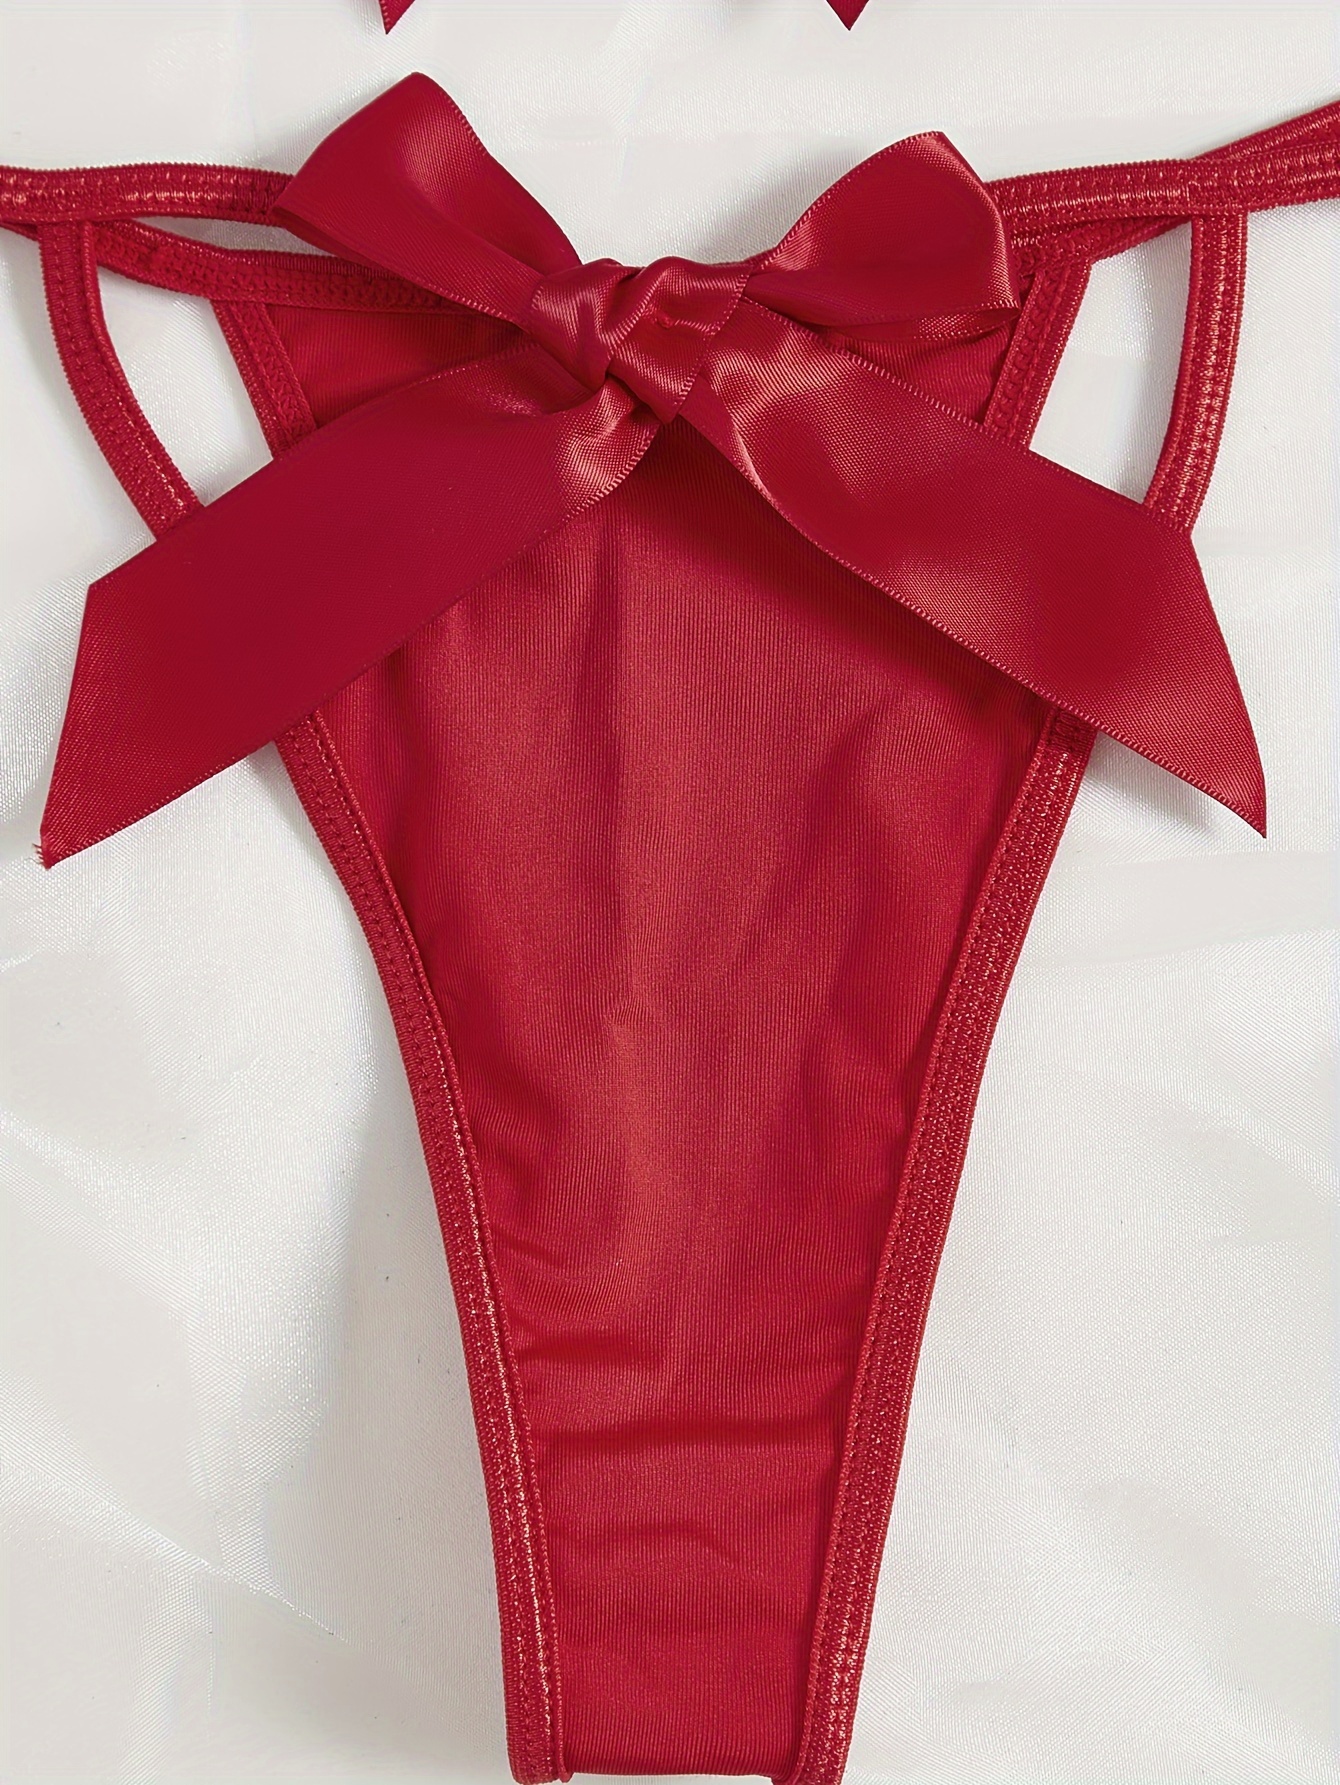 TQWQT Women's Sexy Cut Out Lingerie Set Two Piece Bra and Panty Bow Tie  Silk Satin Strap Bralette Sleepwear 